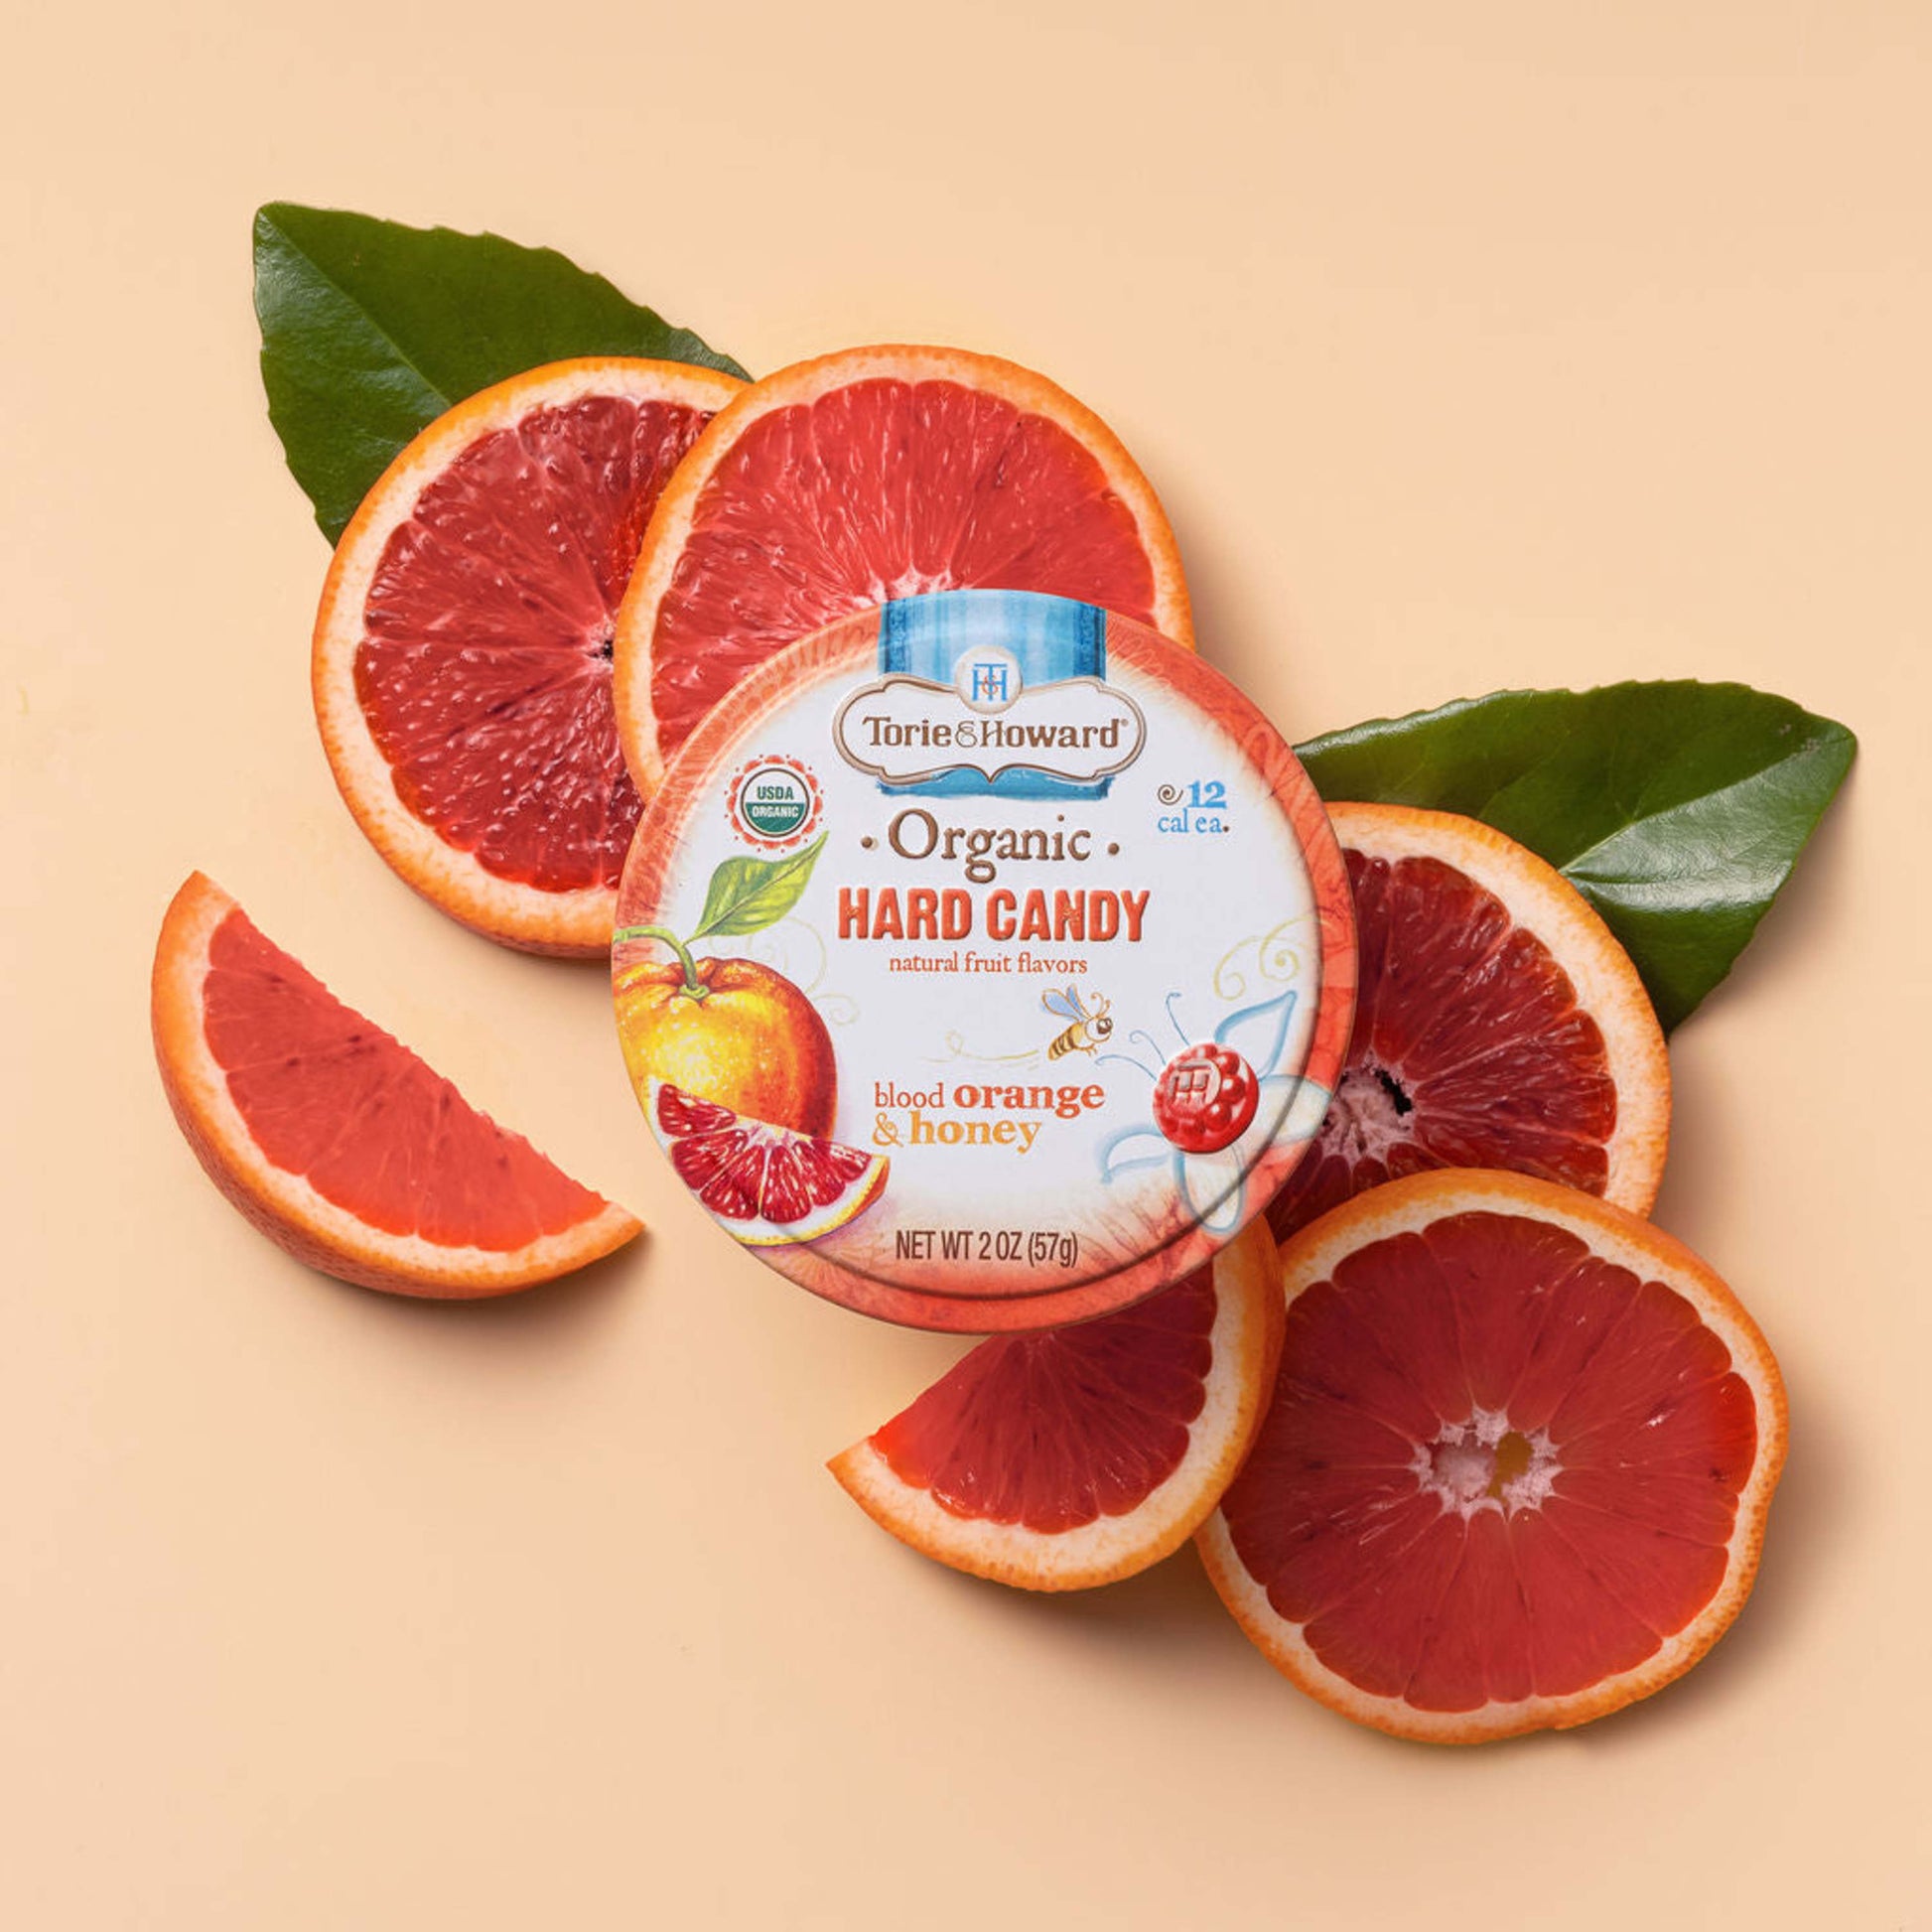 Torie & Howard Blood Orange & Honey Organic Hard Candy 2oz tin on juicy oranges